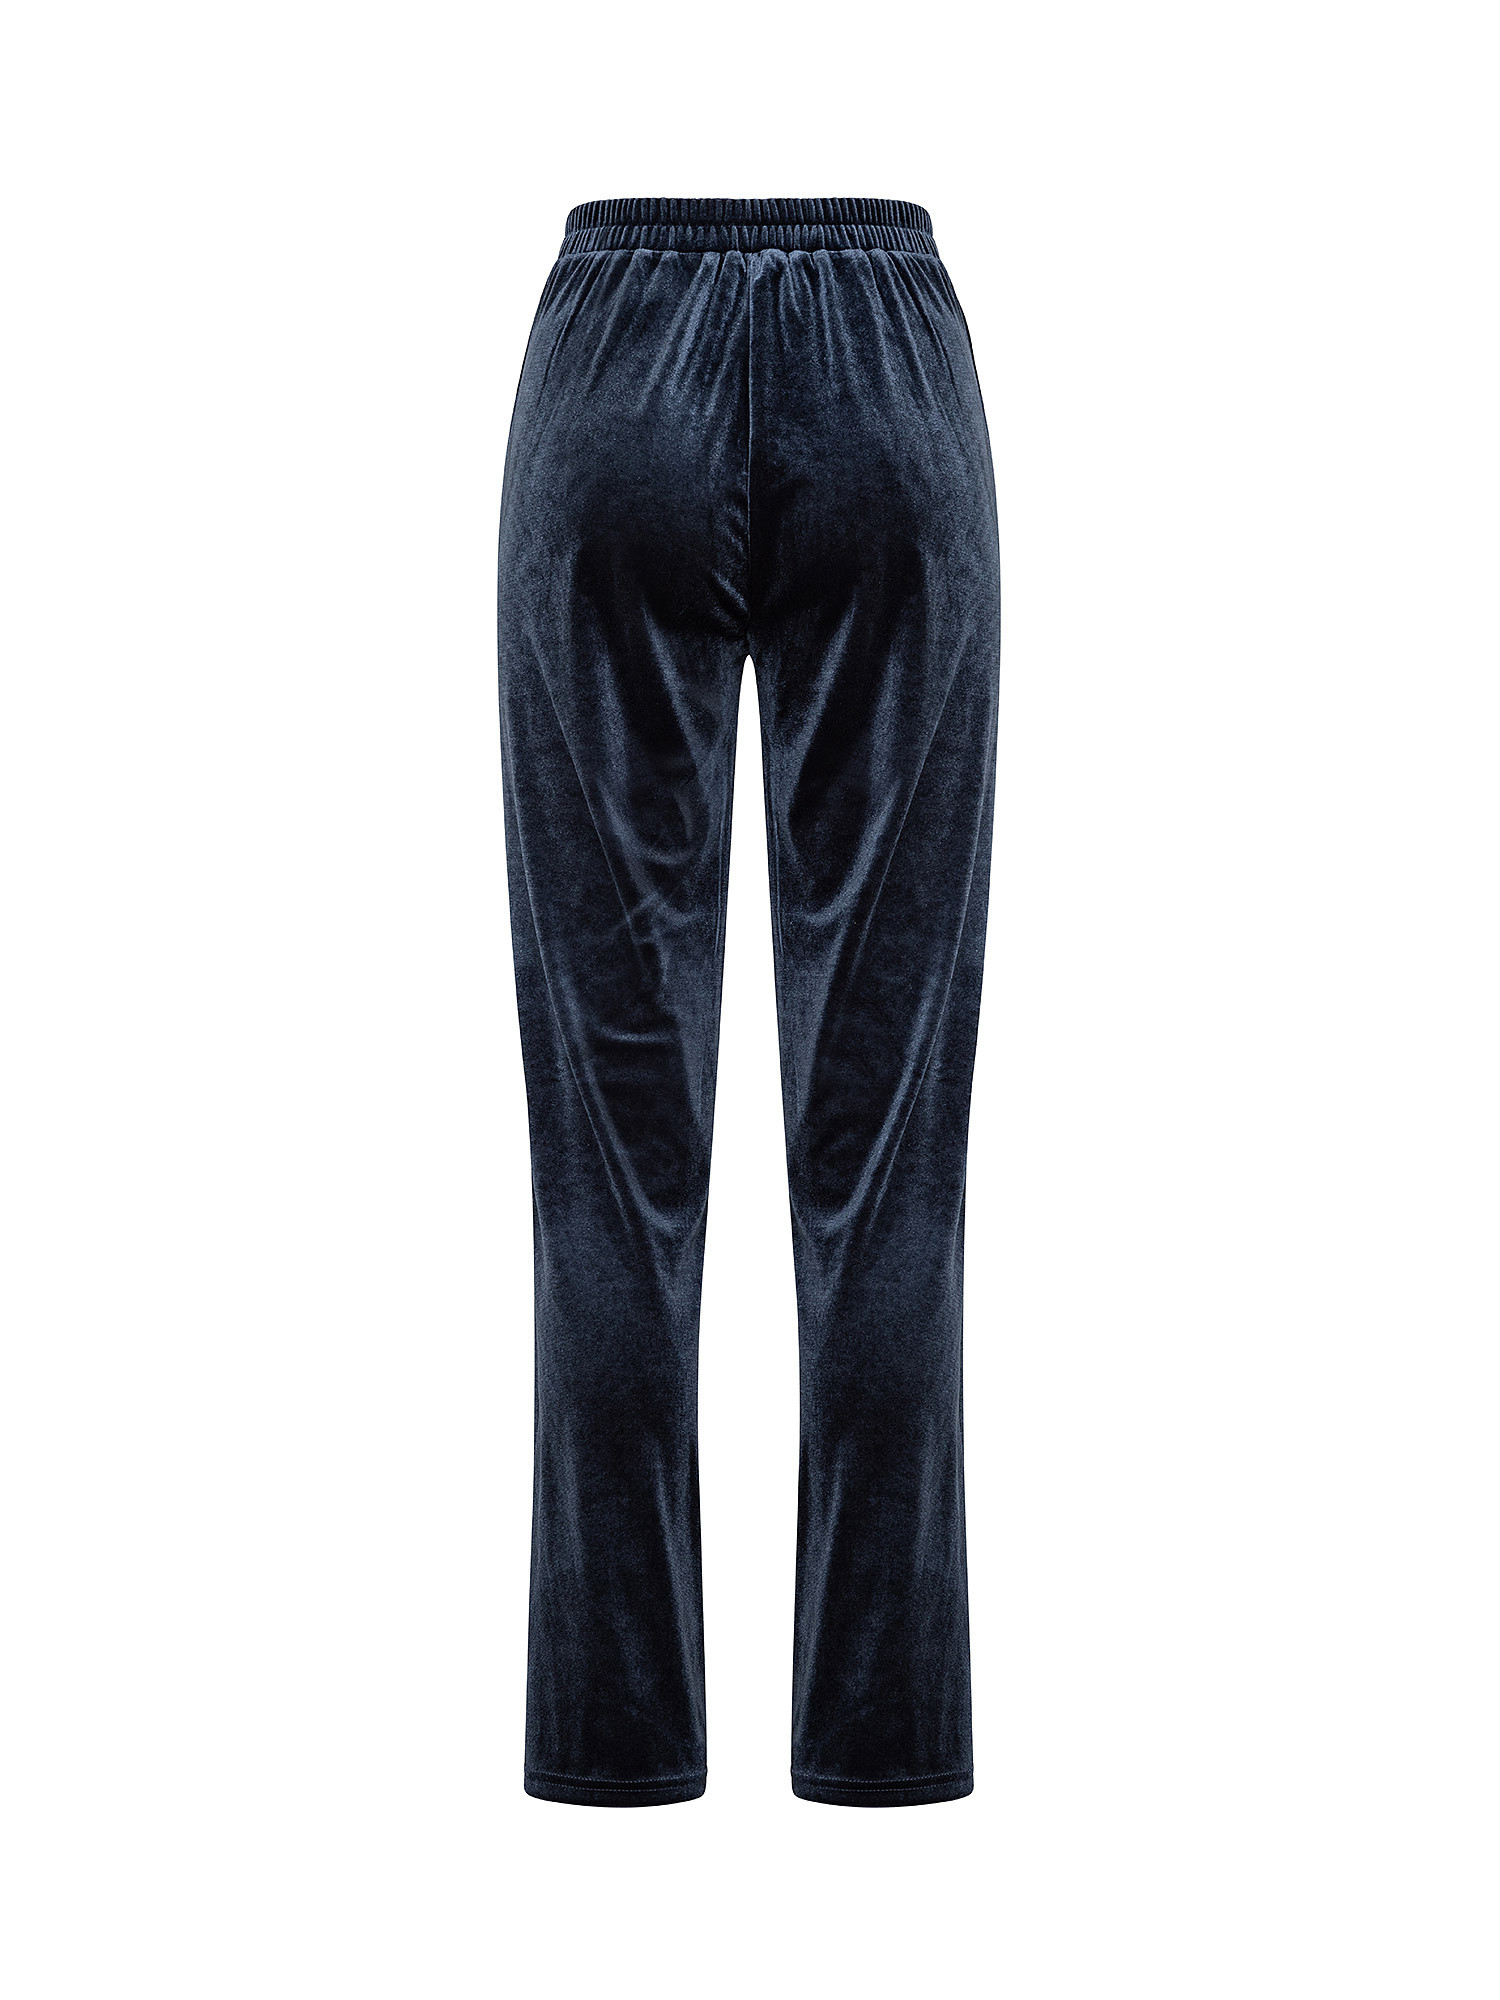 Pantalone in ciniglia, Blu, large image number 1